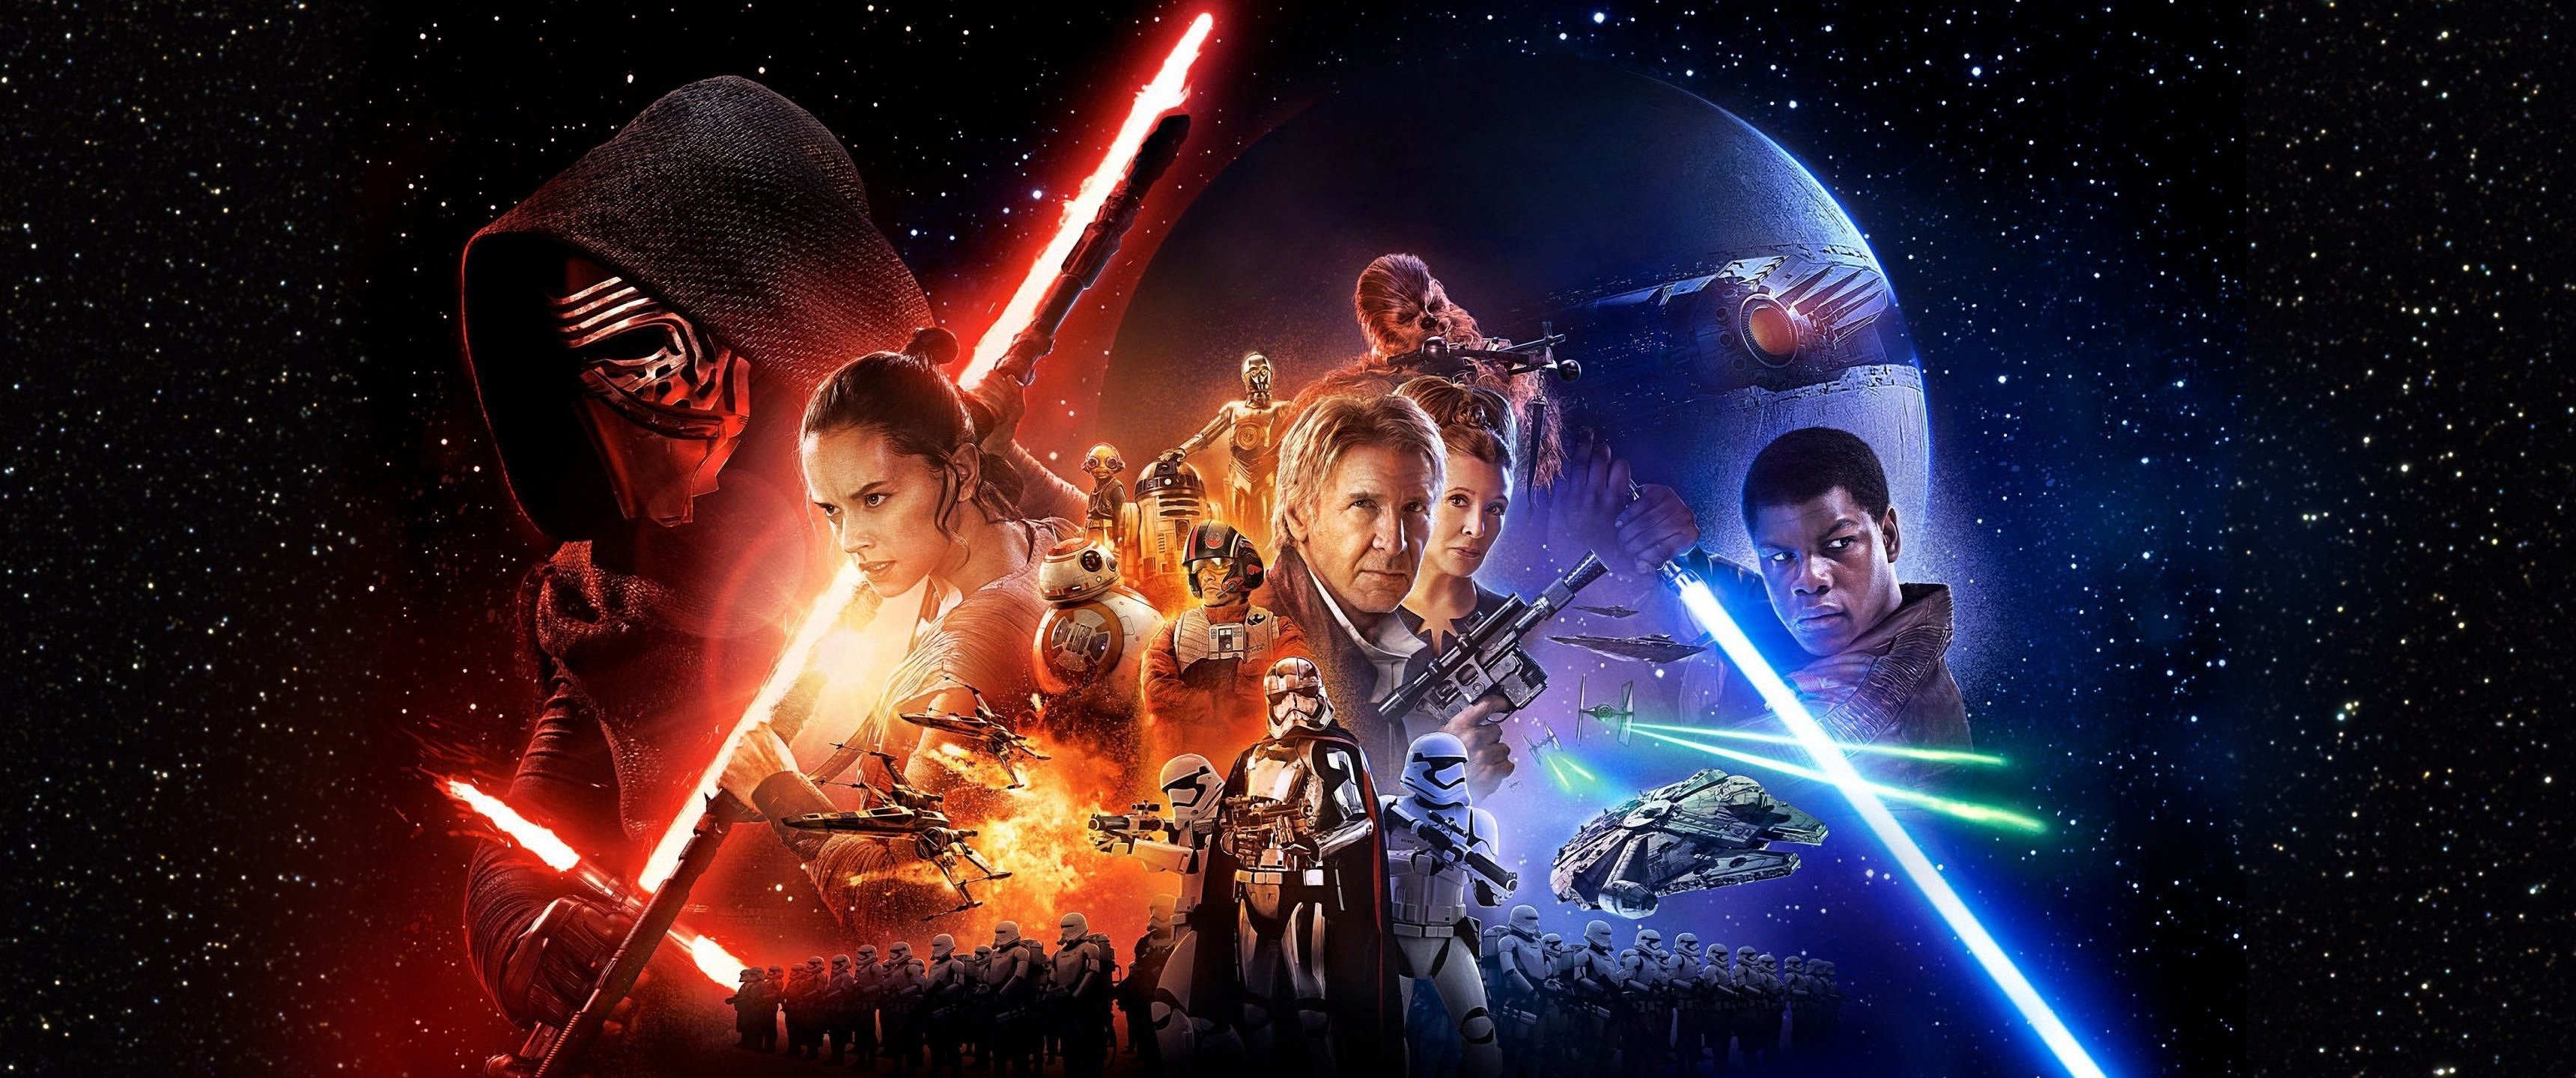 star wars the force awakens full movie free online hd